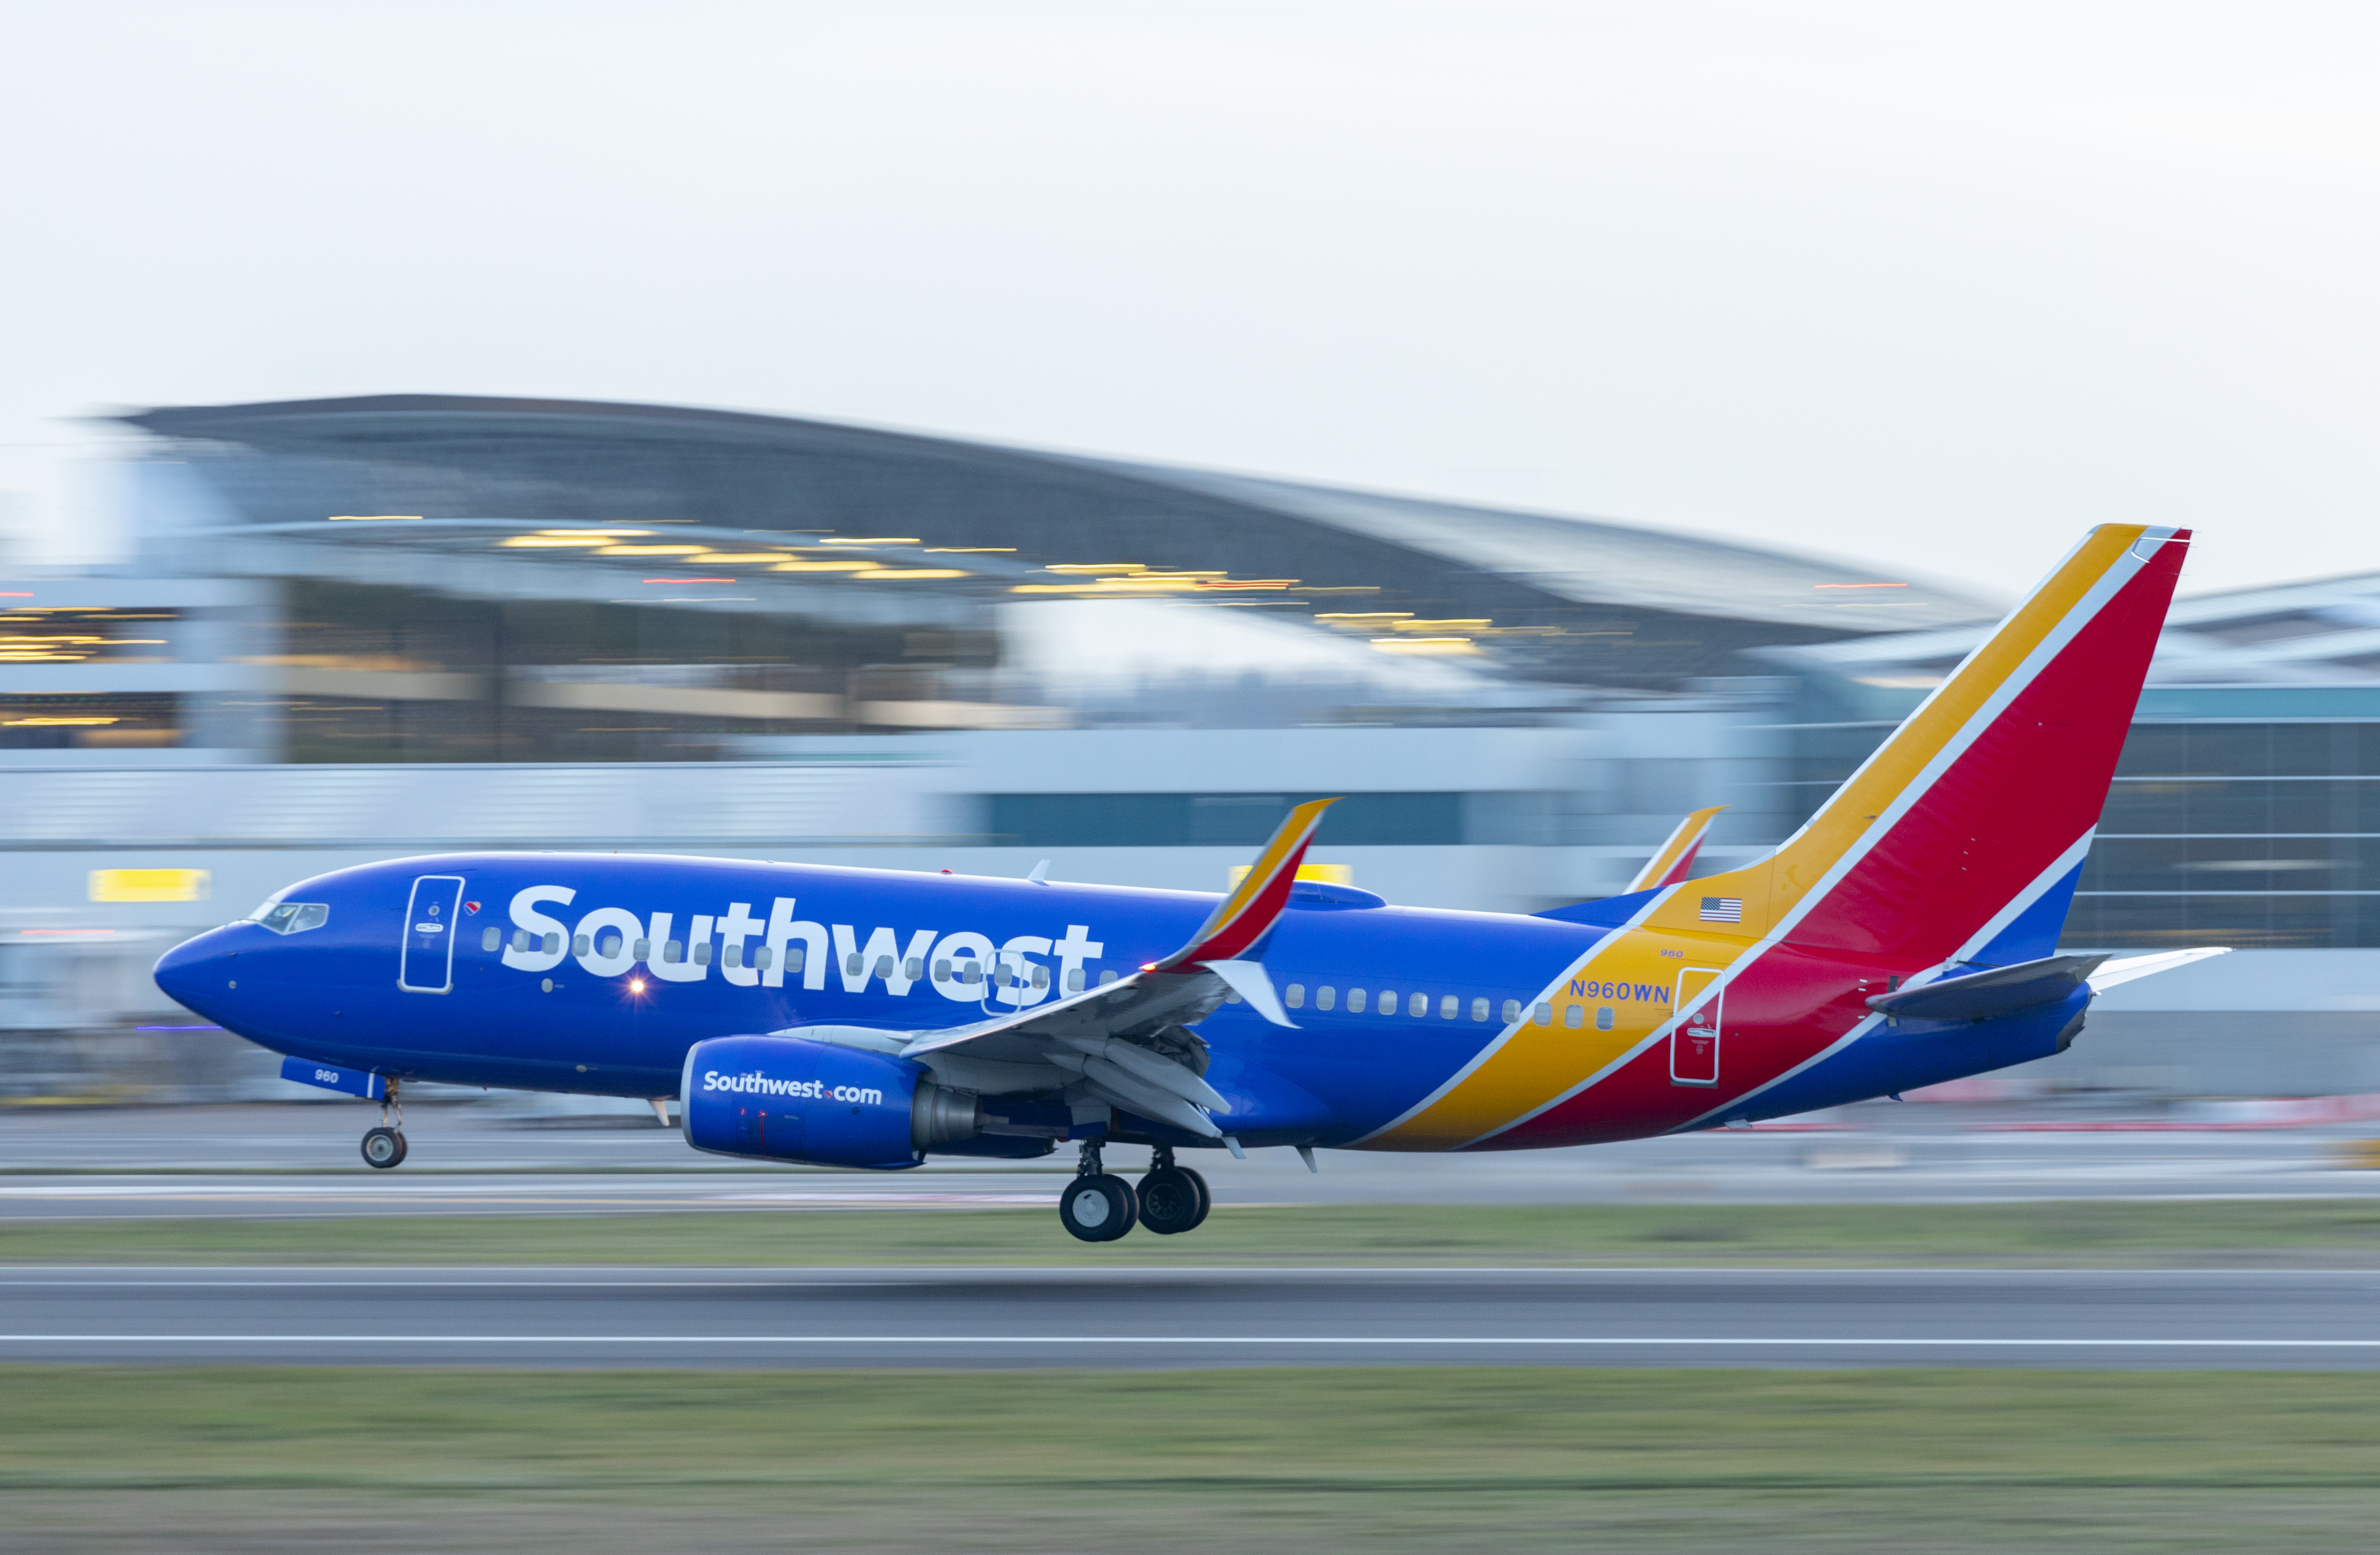 Aerolíneas como Southwest, PLAY y Air New Zealand han optado por usar color en todo